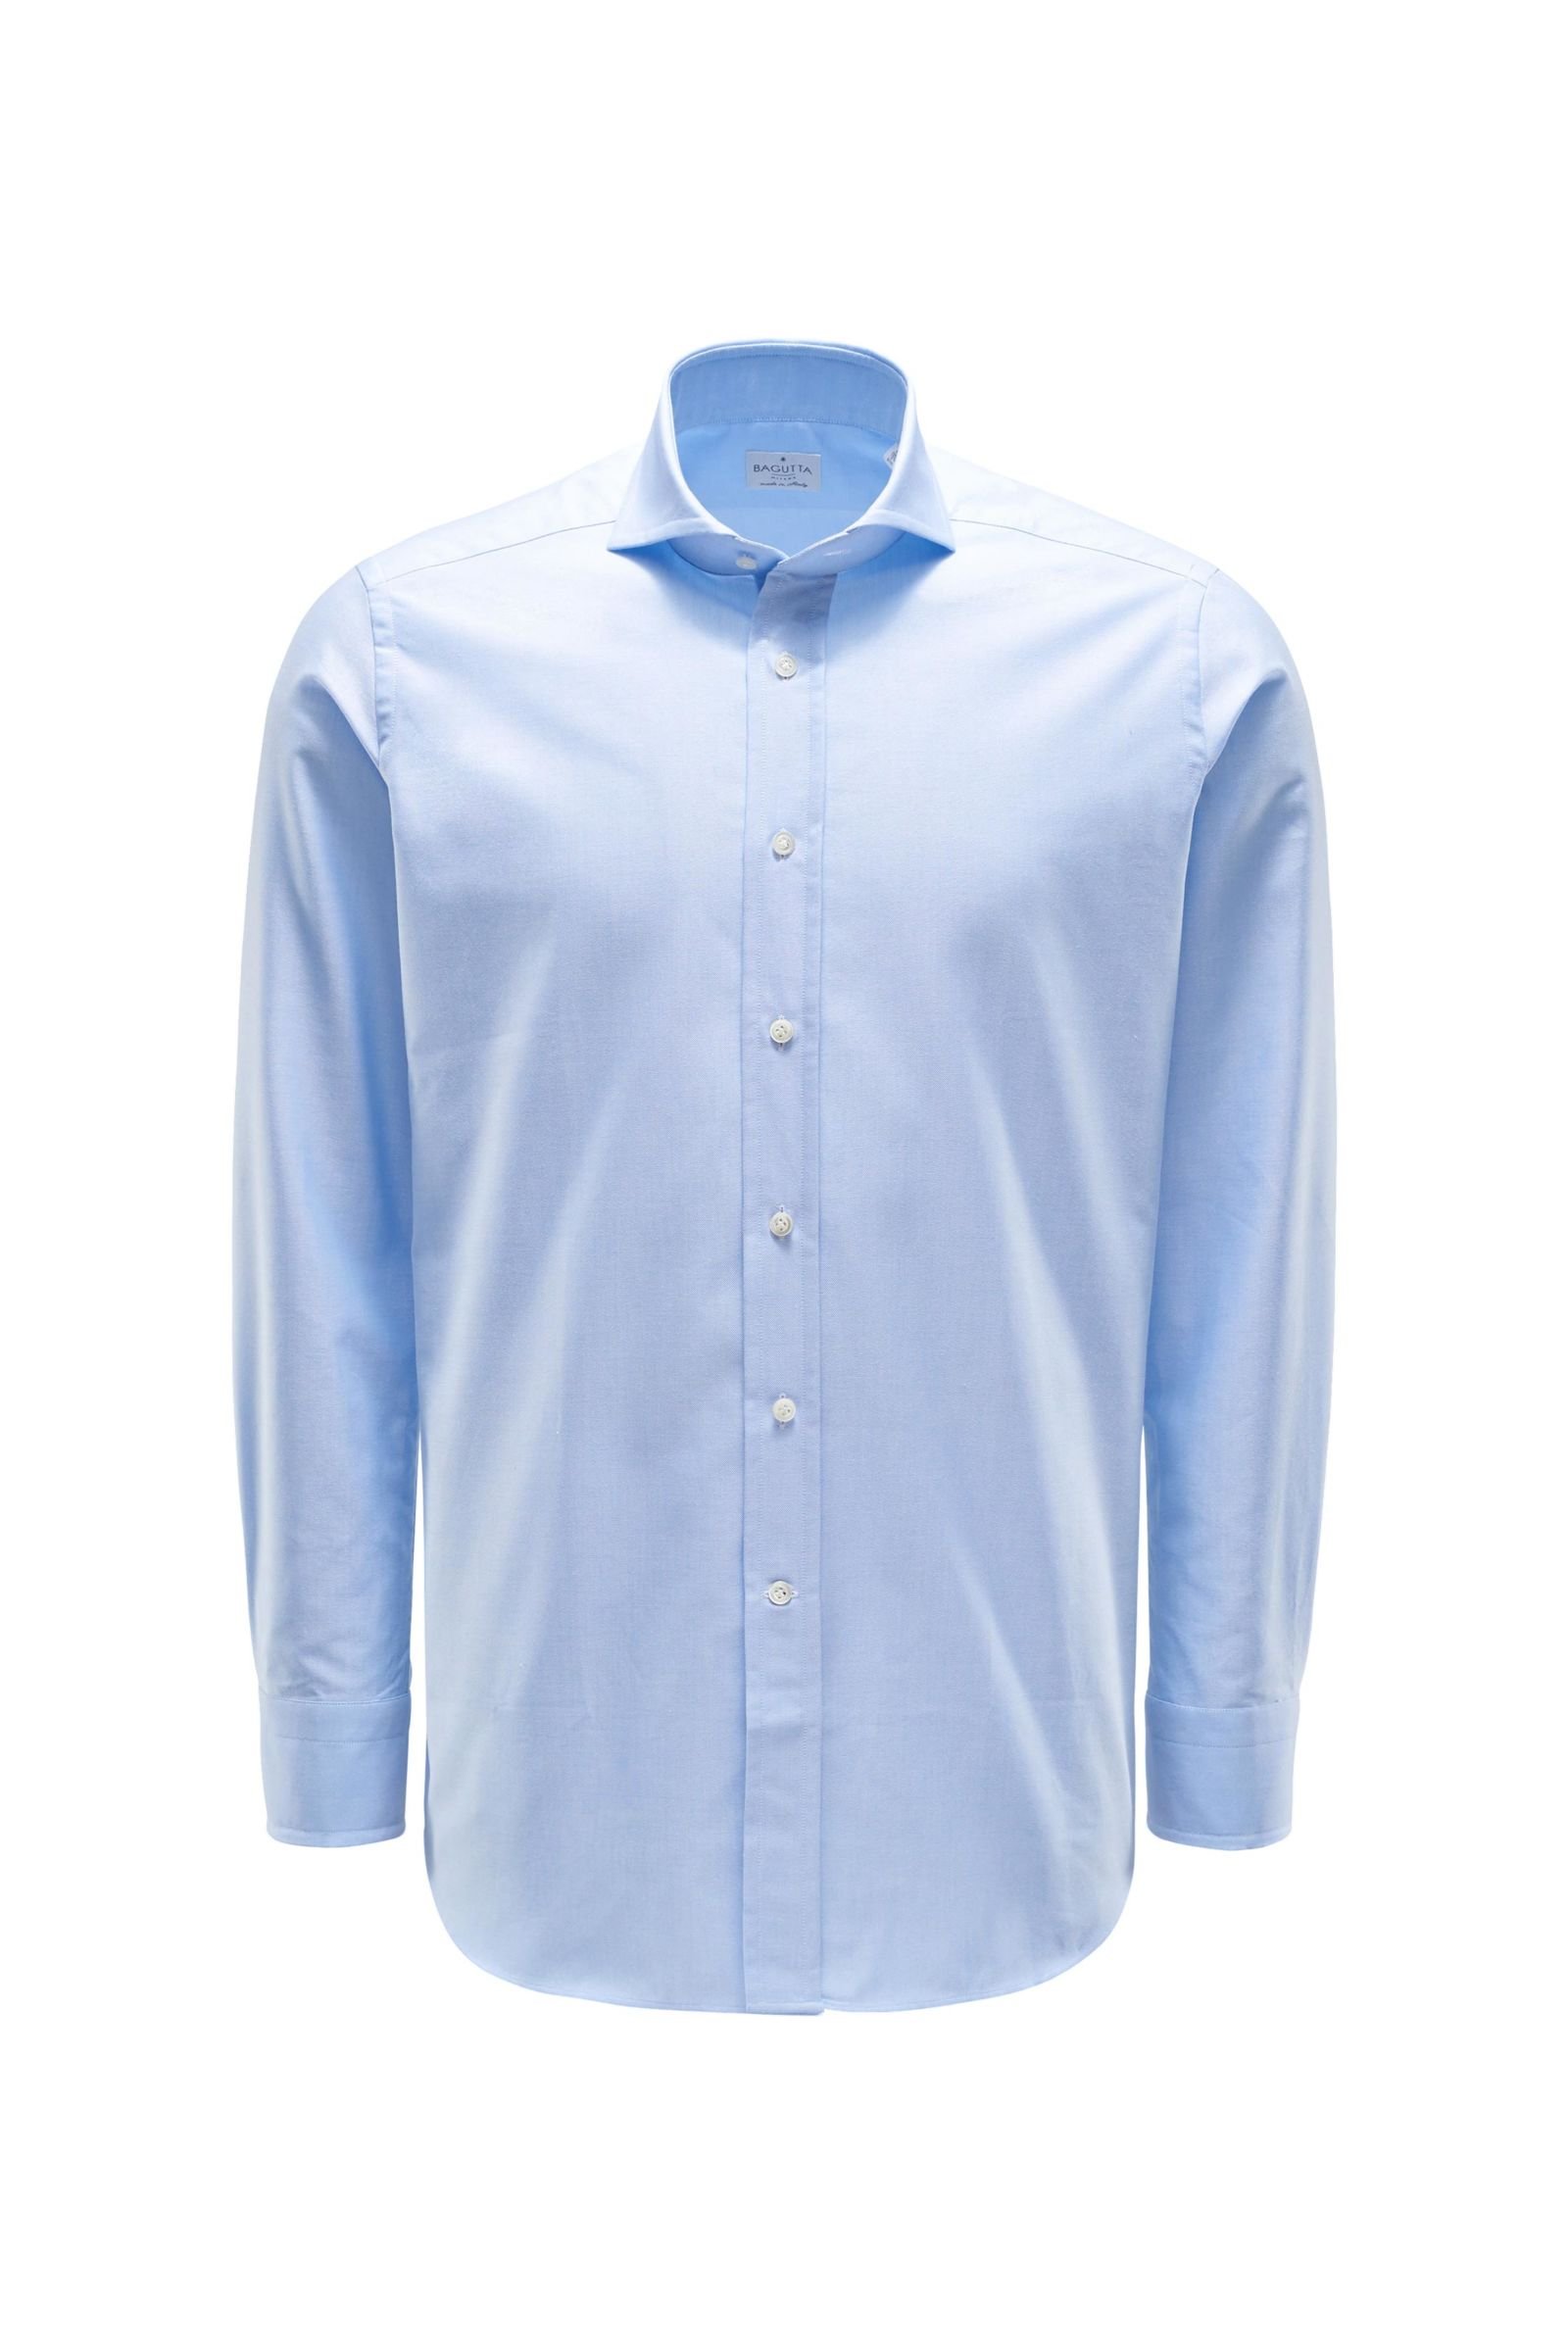 Oxford shirt 'Windsor' shark collar pastel blue